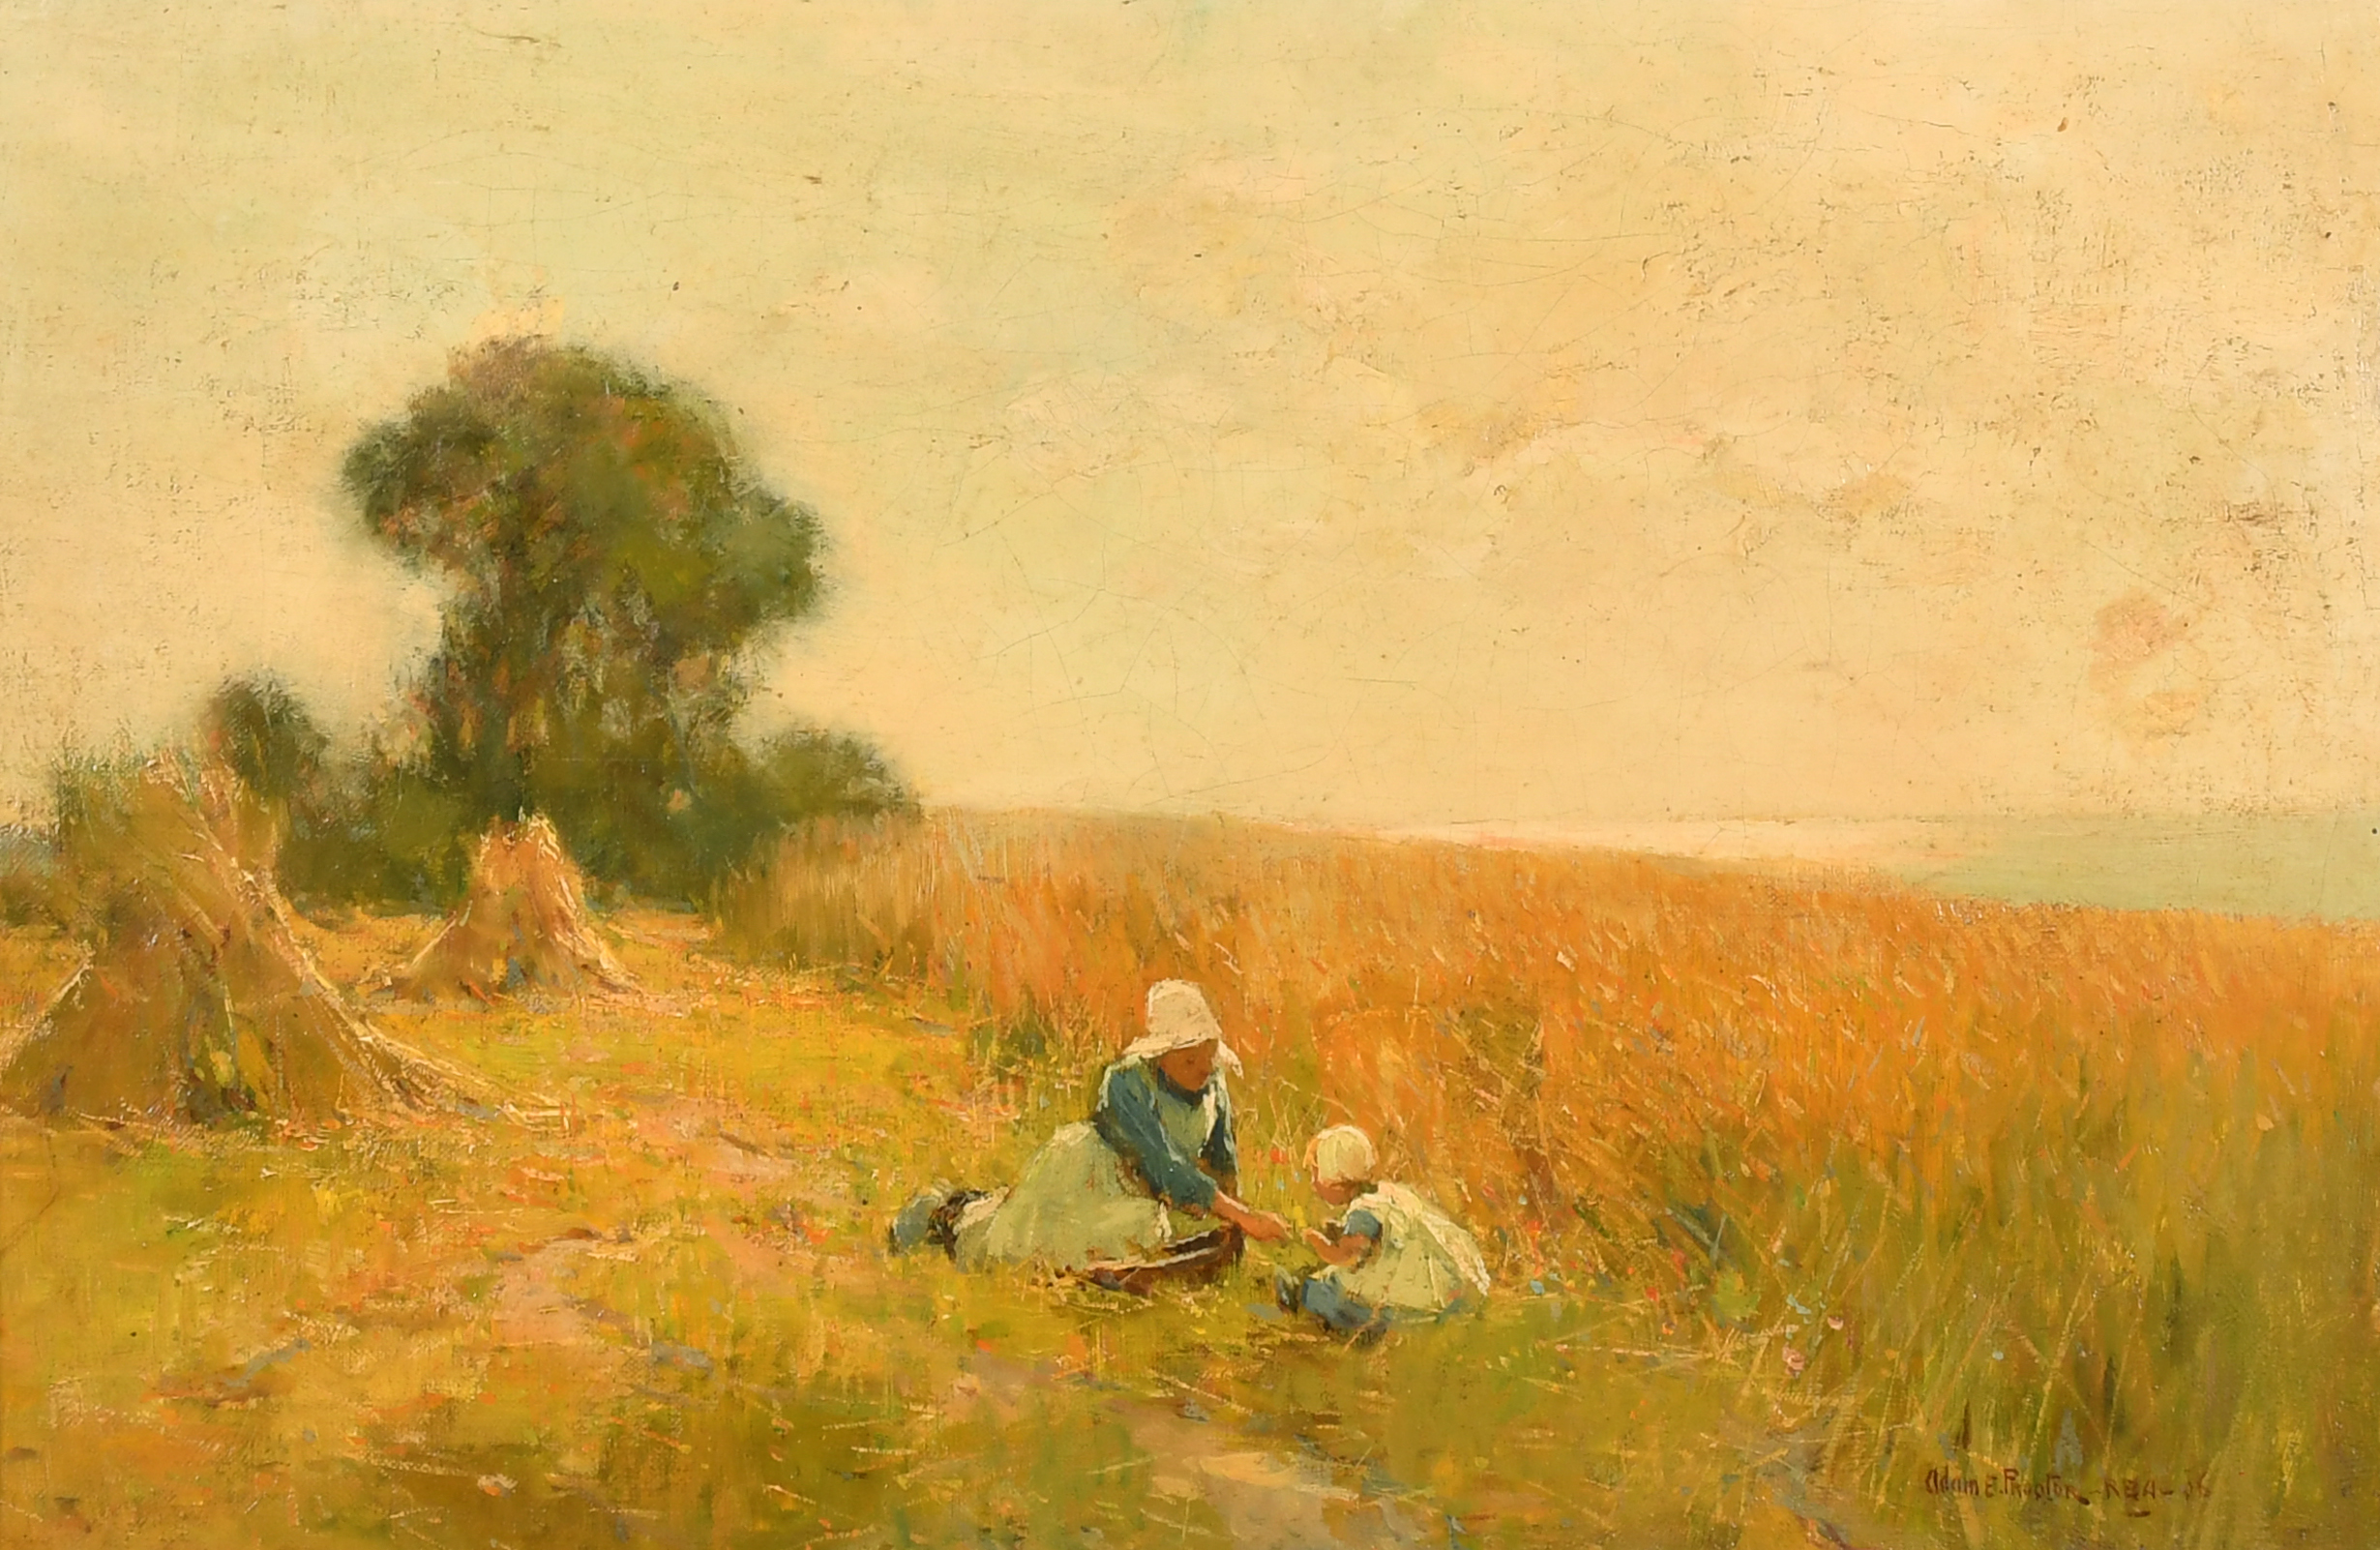 Adam Edwin Proctor (1864-1913) British. Children in a Corn Field, Oil on Canvas, Signed, Inscribed